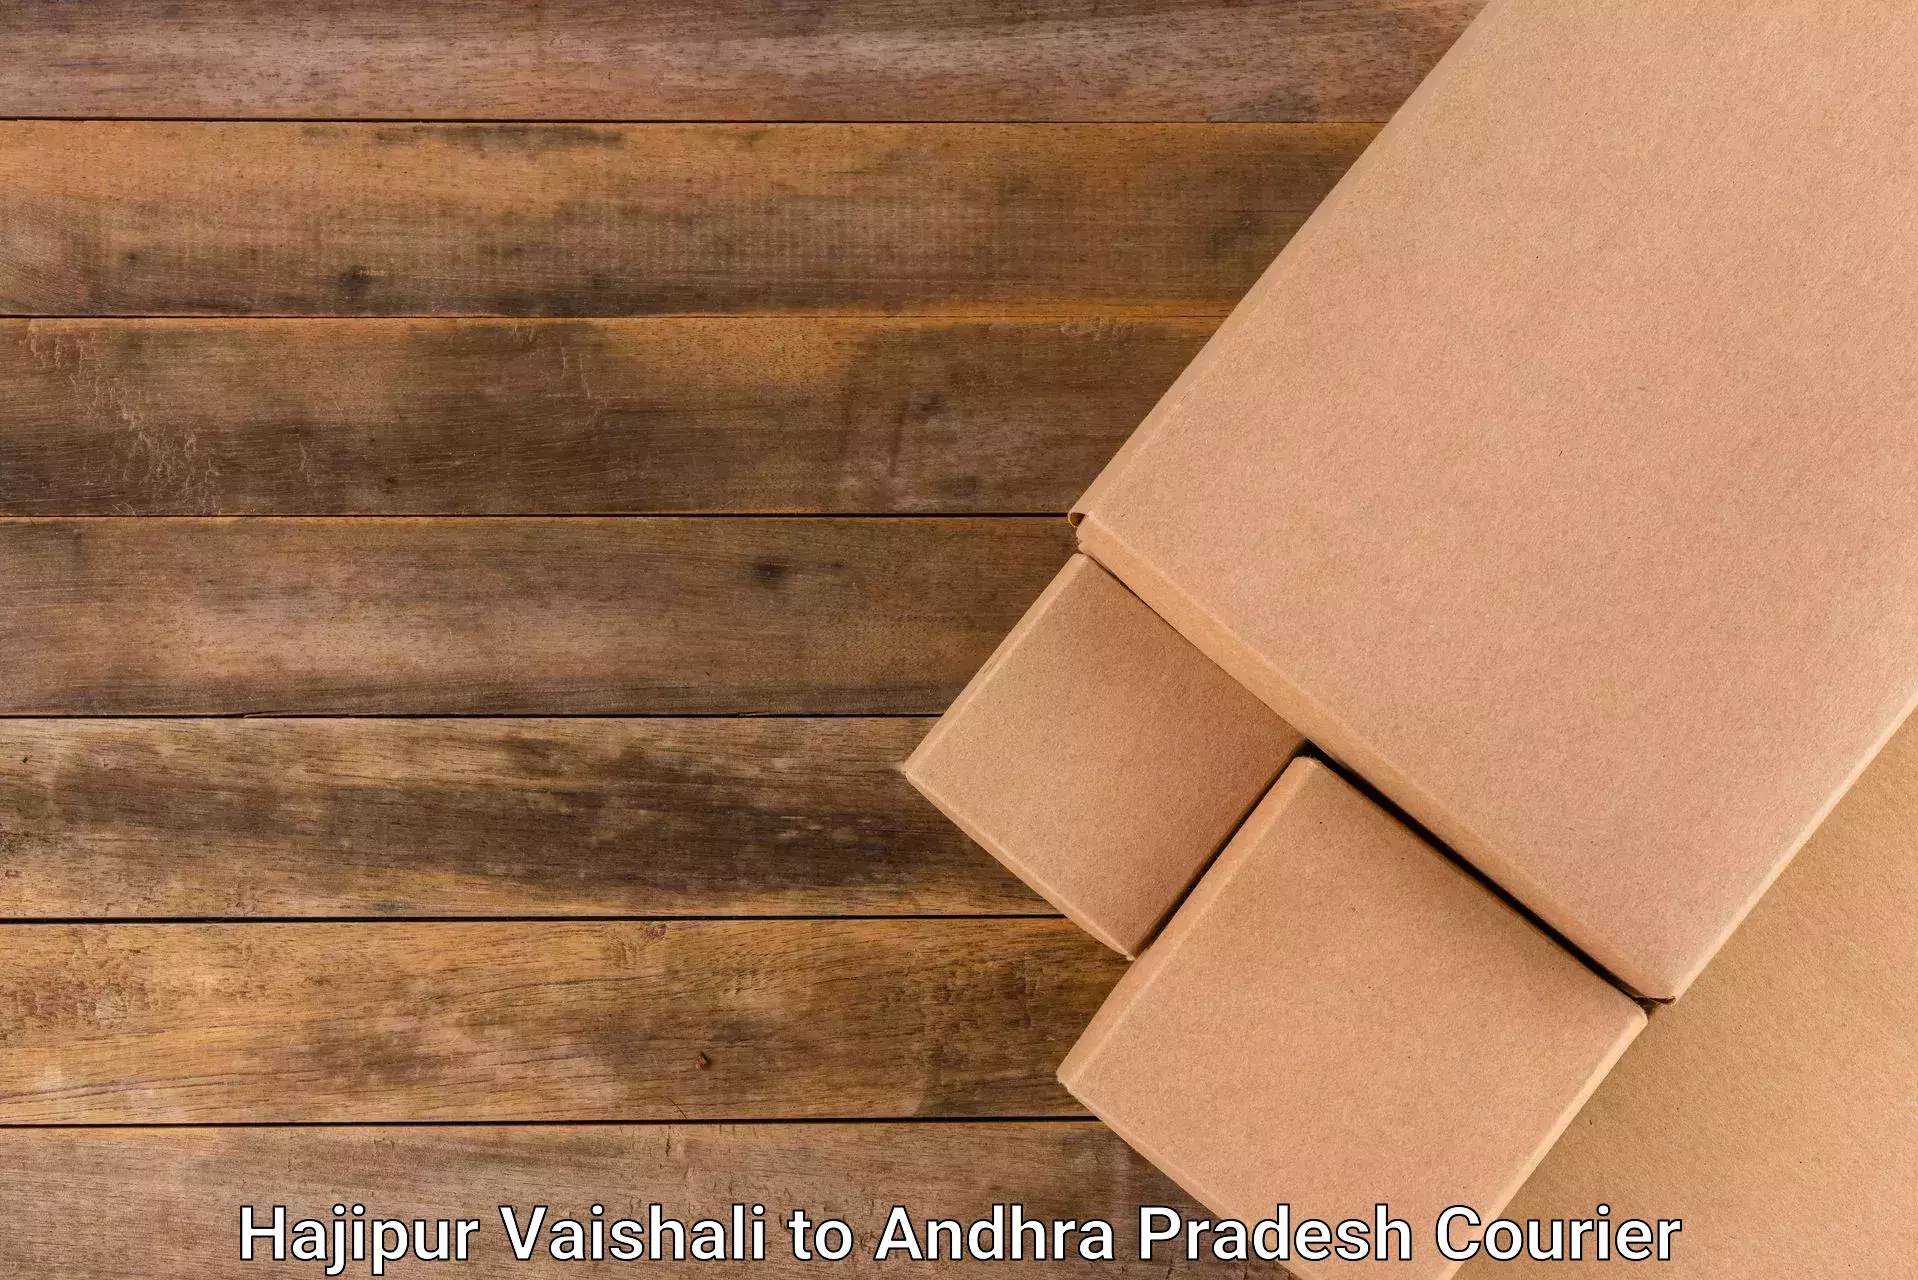 Full-service courier options Hajipur Vaishali to Betamcherla